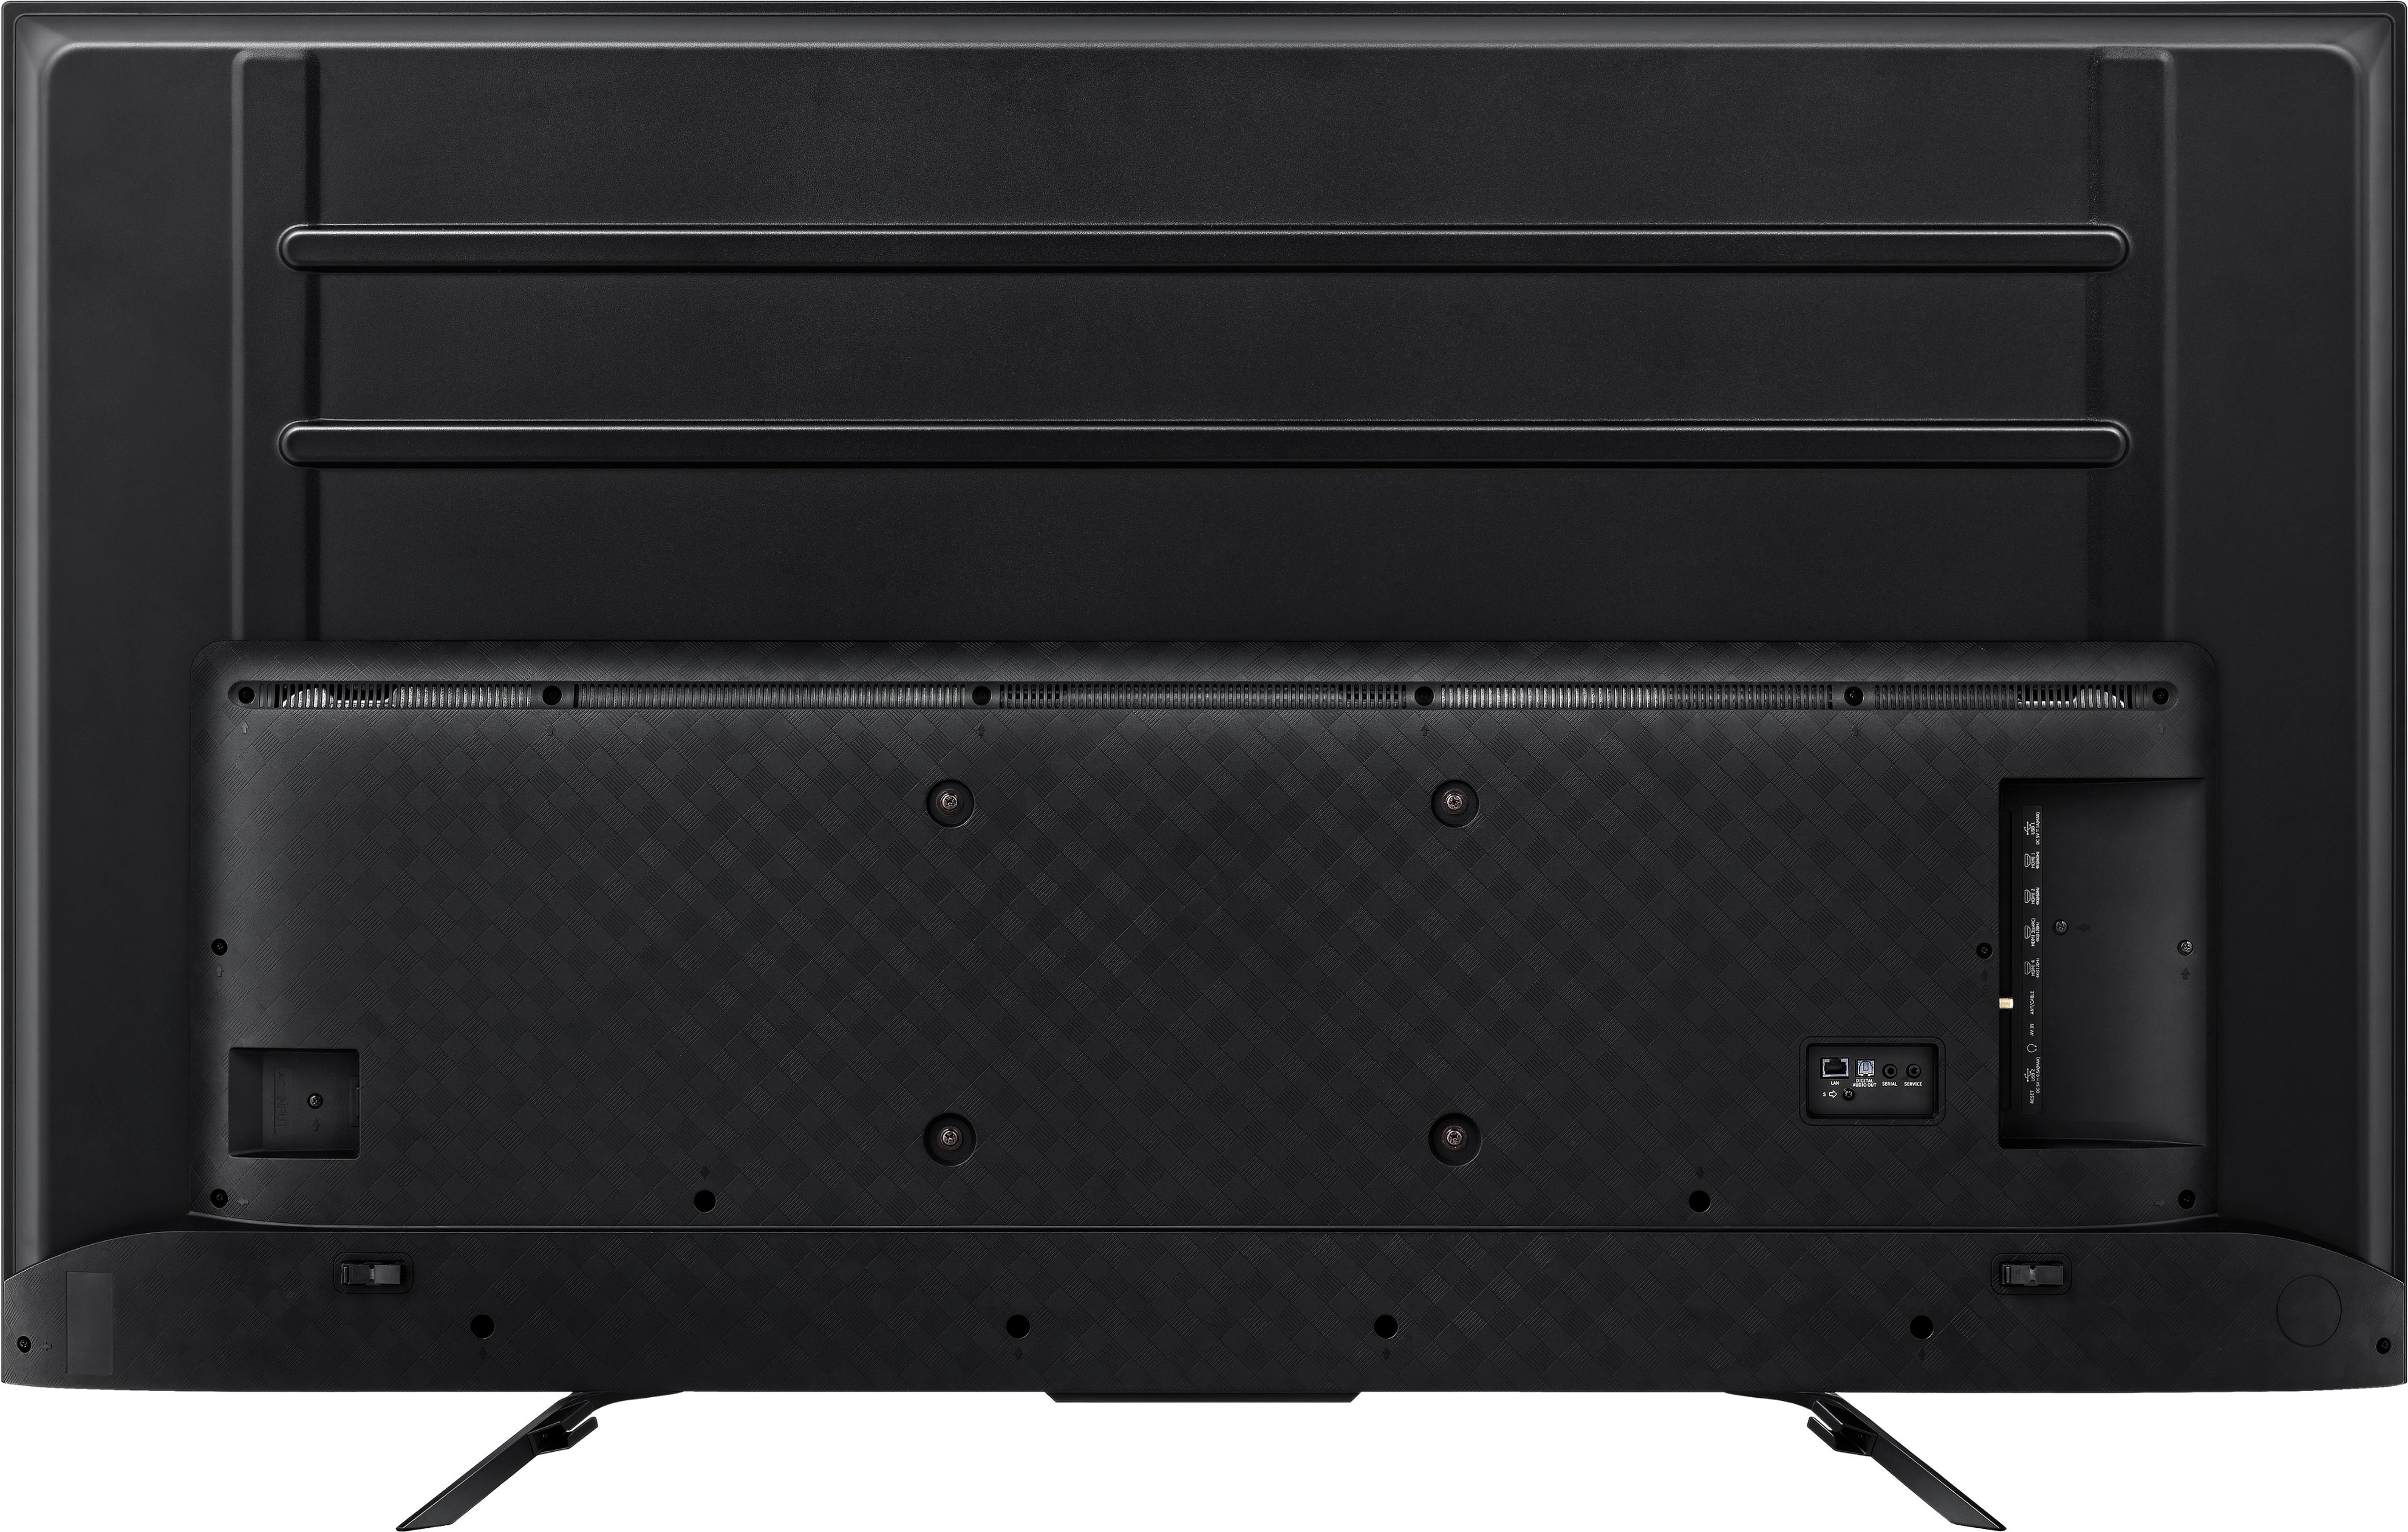 Hisense ULED Premium U7H QLED Series 85-inch Class Quantum Dot Google 4K  Smart TV (85U7H, 2022 Model),Black